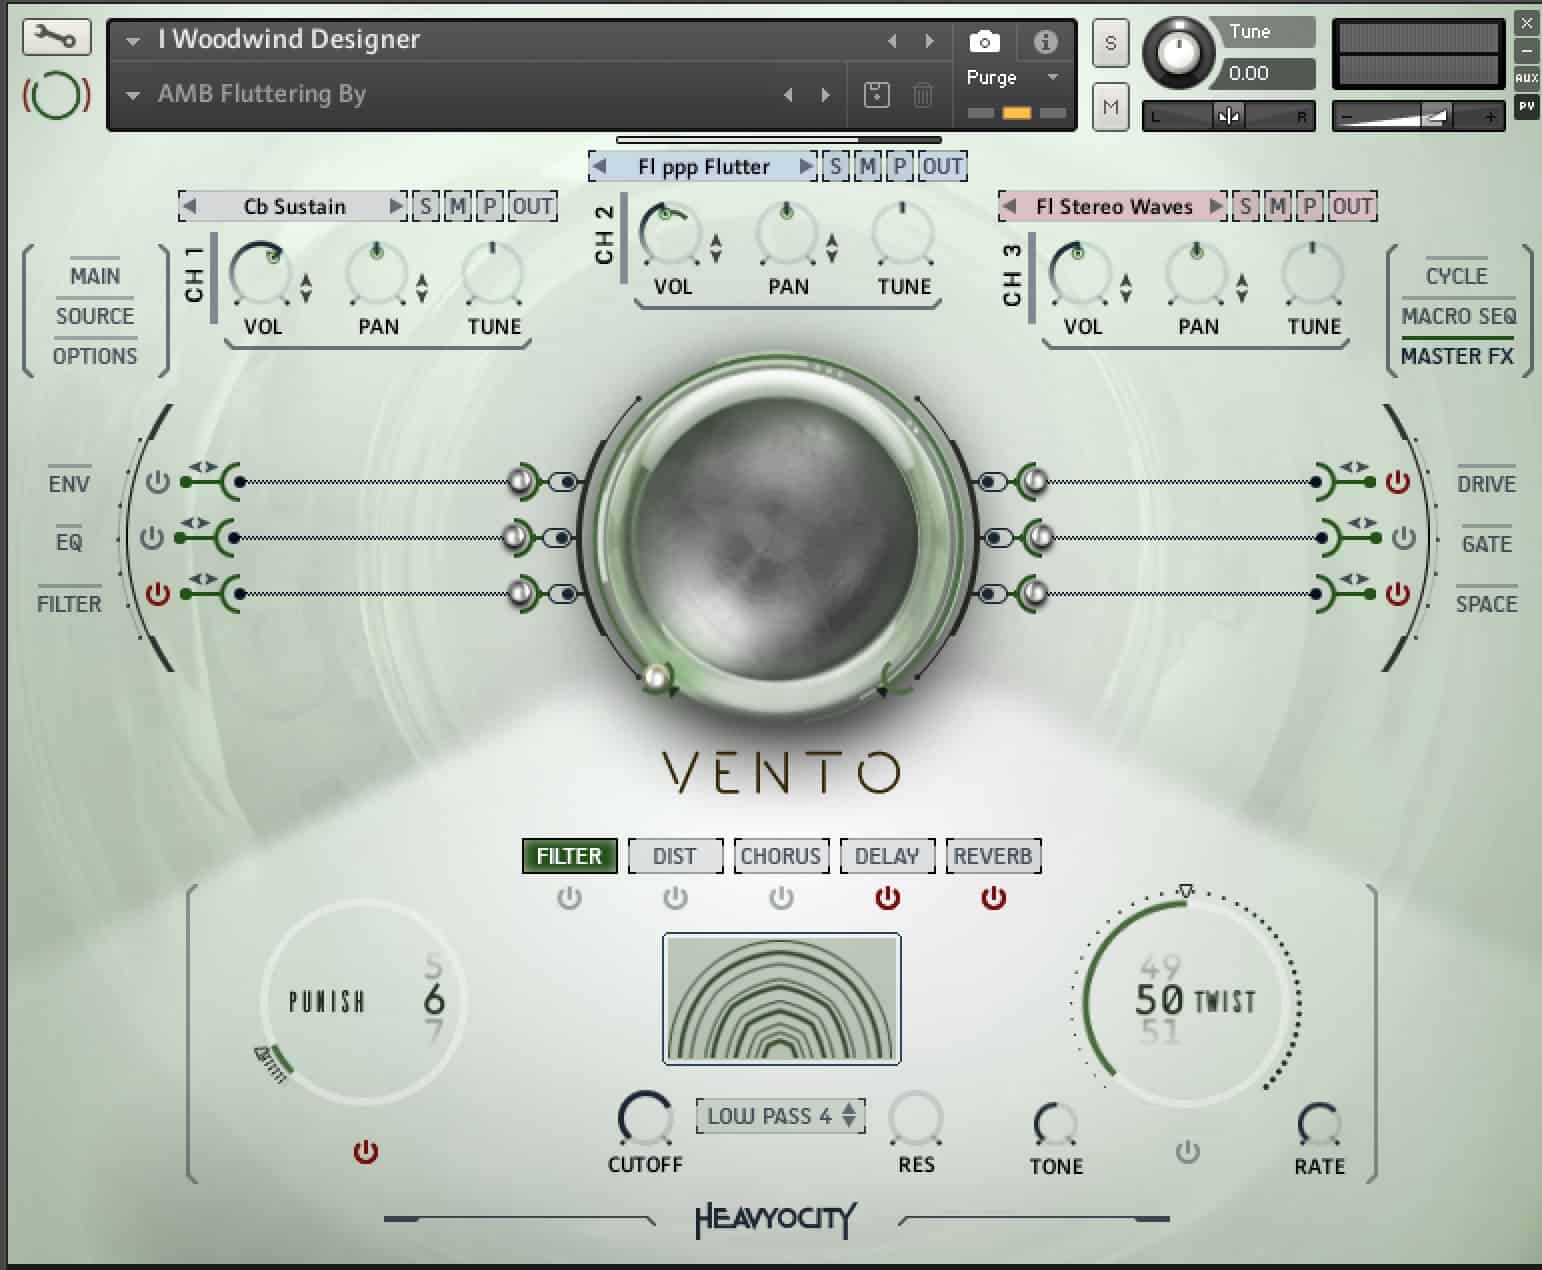 VENTO: Modern Woodwinds Review – a Hybrid Textures Woodwinds Sound Design Engine